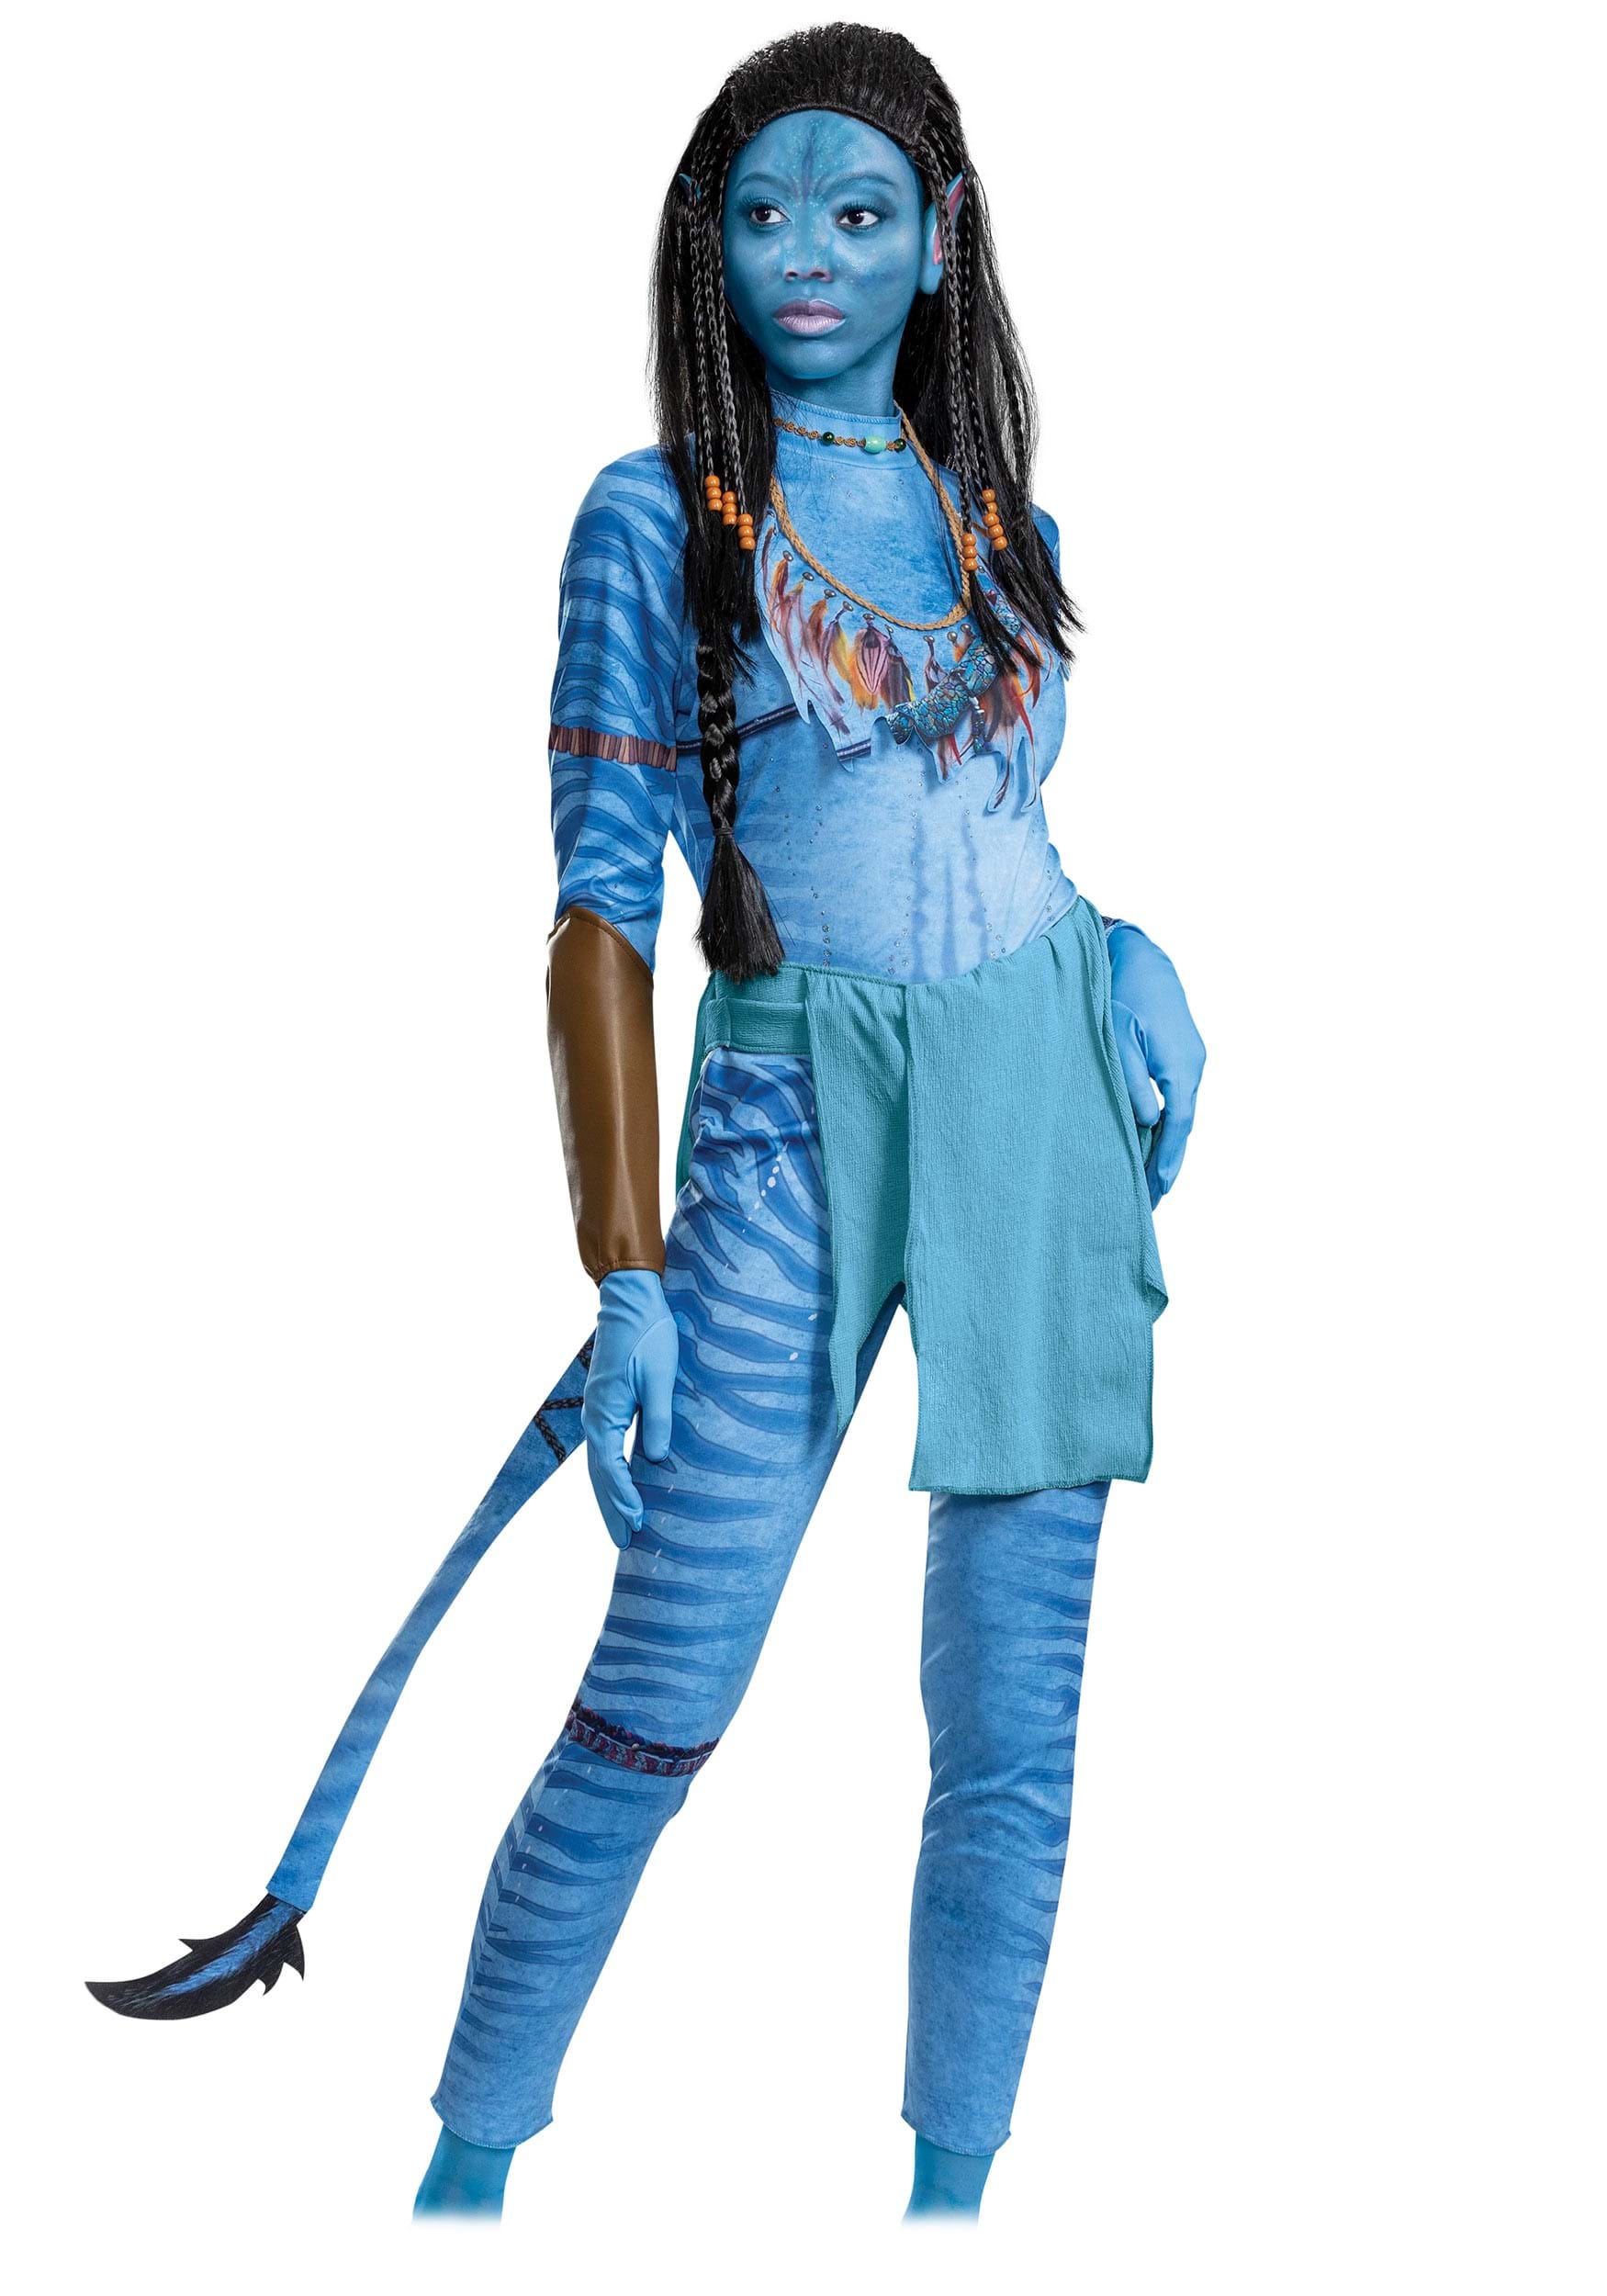 Image of Avatar Deluxe Neytiri Adult Costume ID DI129239-M